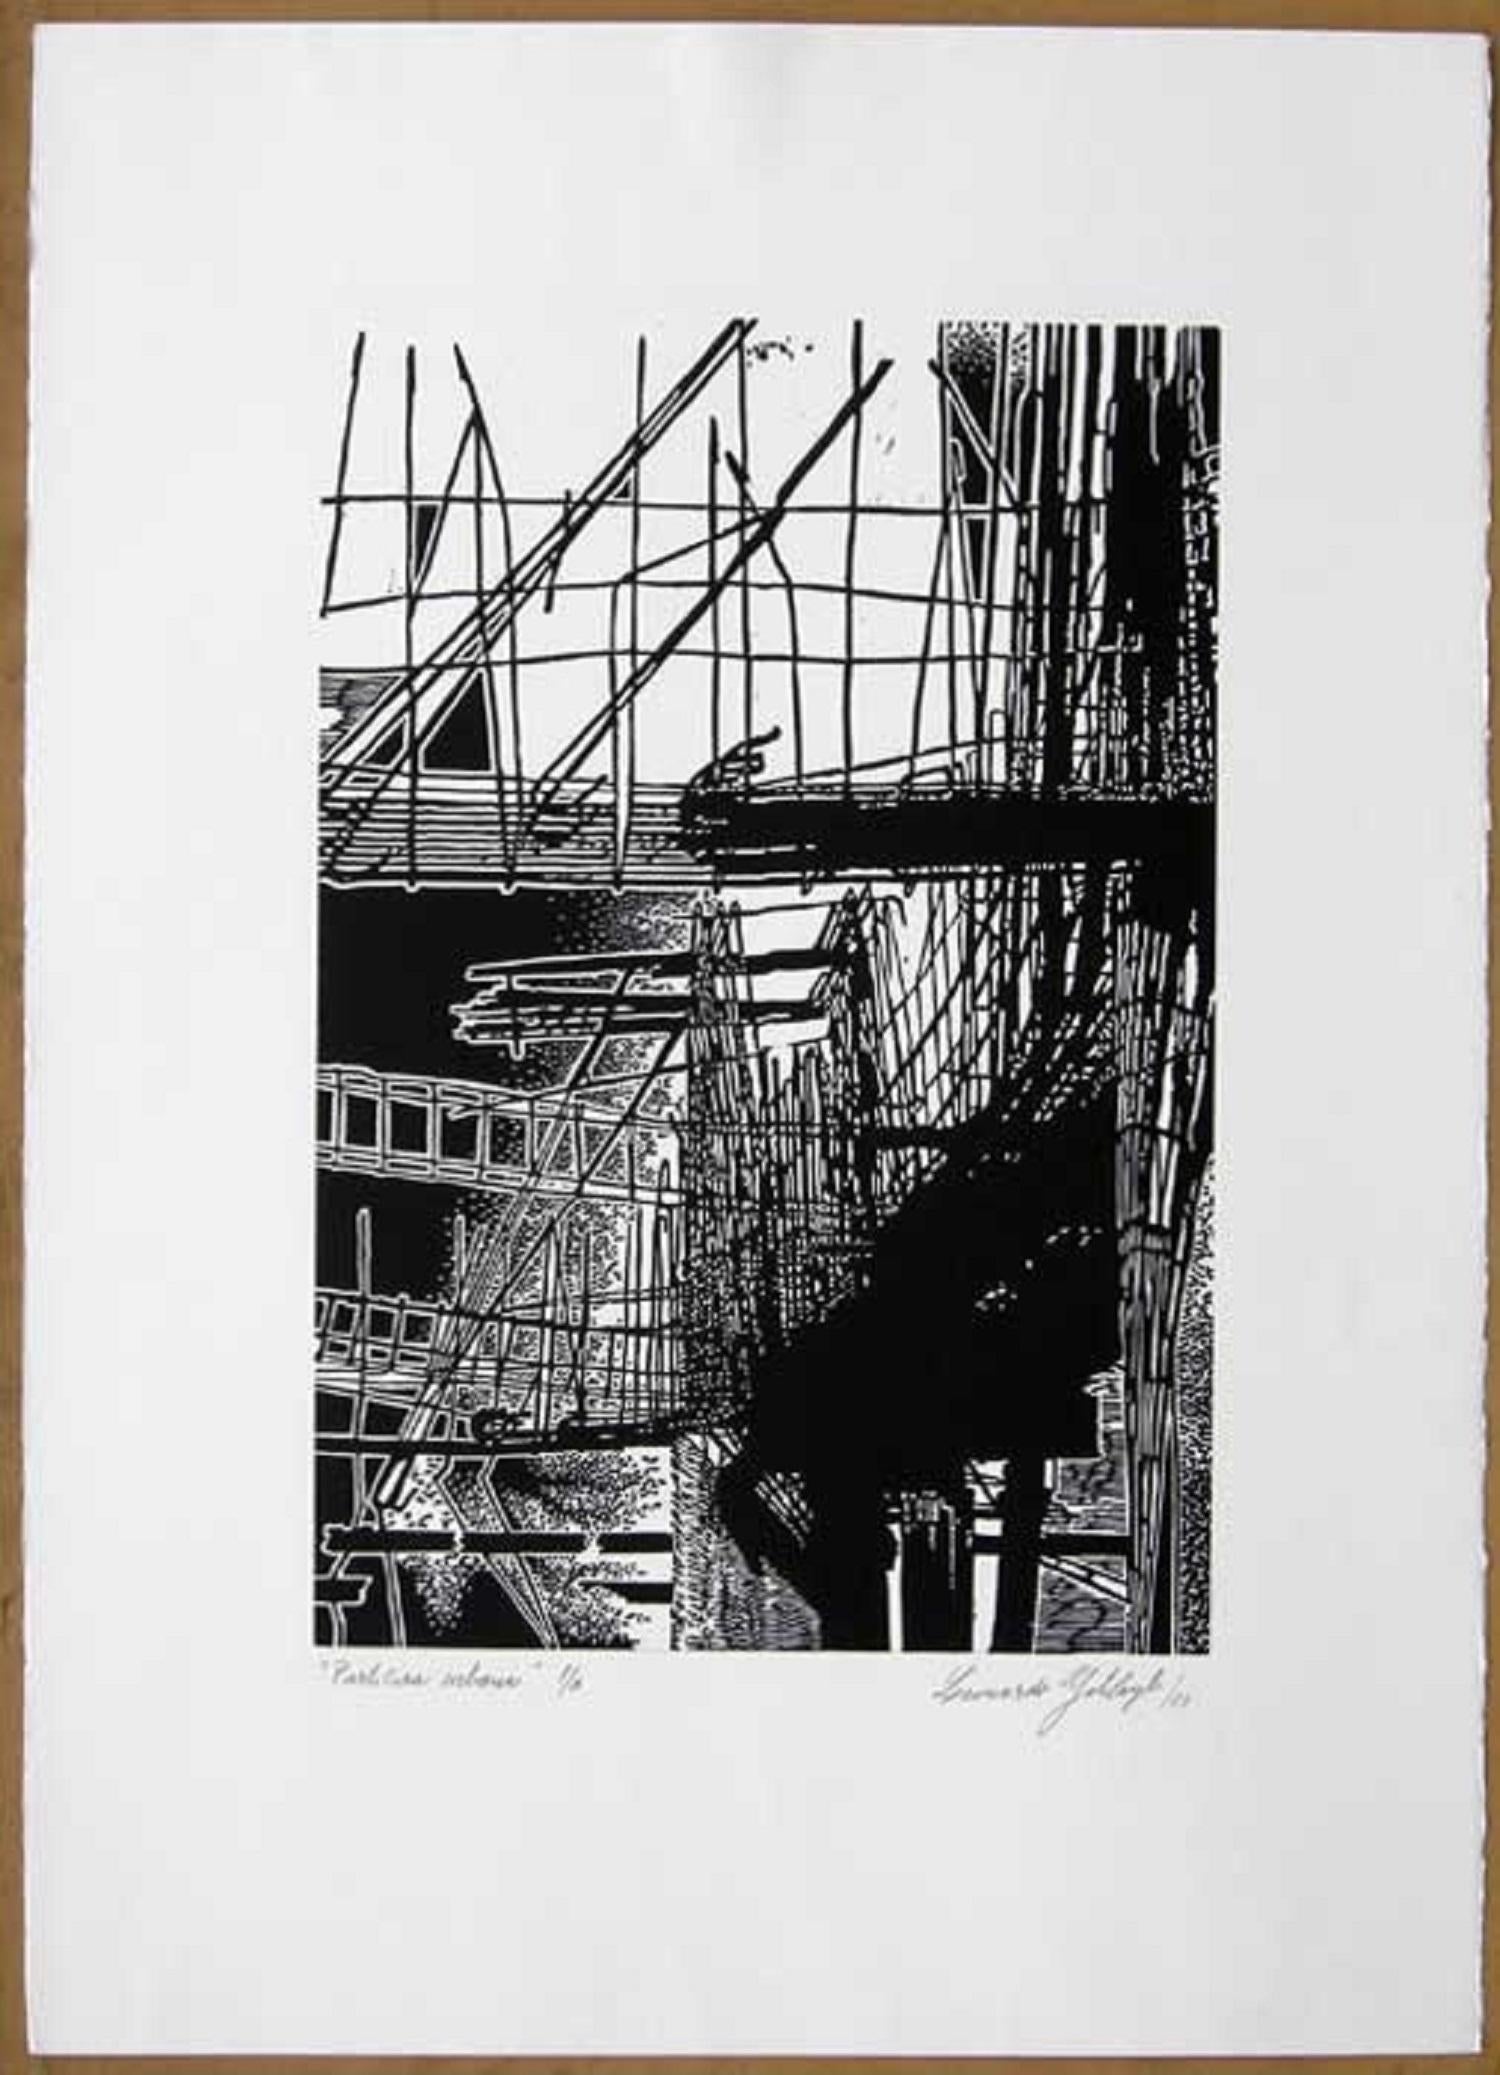 Leonardo Gotleyb (Argentina, 1958)
'Partitura urbana', 2003
woodcut on paper Velin Arches 300 g.
27.6 x 19.7 in. (70 x 50 cm.)
ID: GOT-306
Unframed